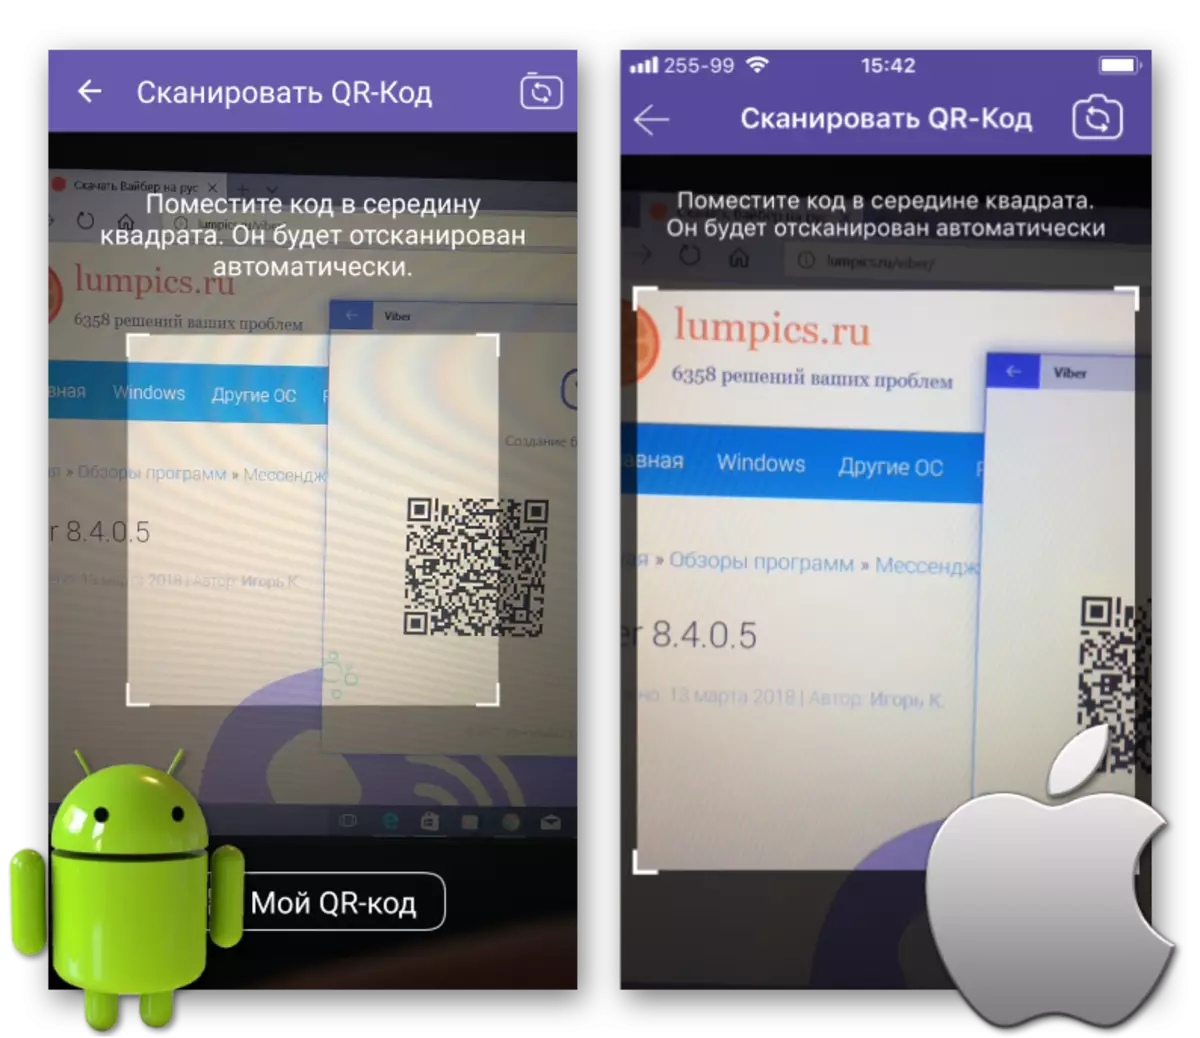 Viber для Windows з оф.сайта скнировать QR-кода з дапамогай Android-смартфона або iPhone